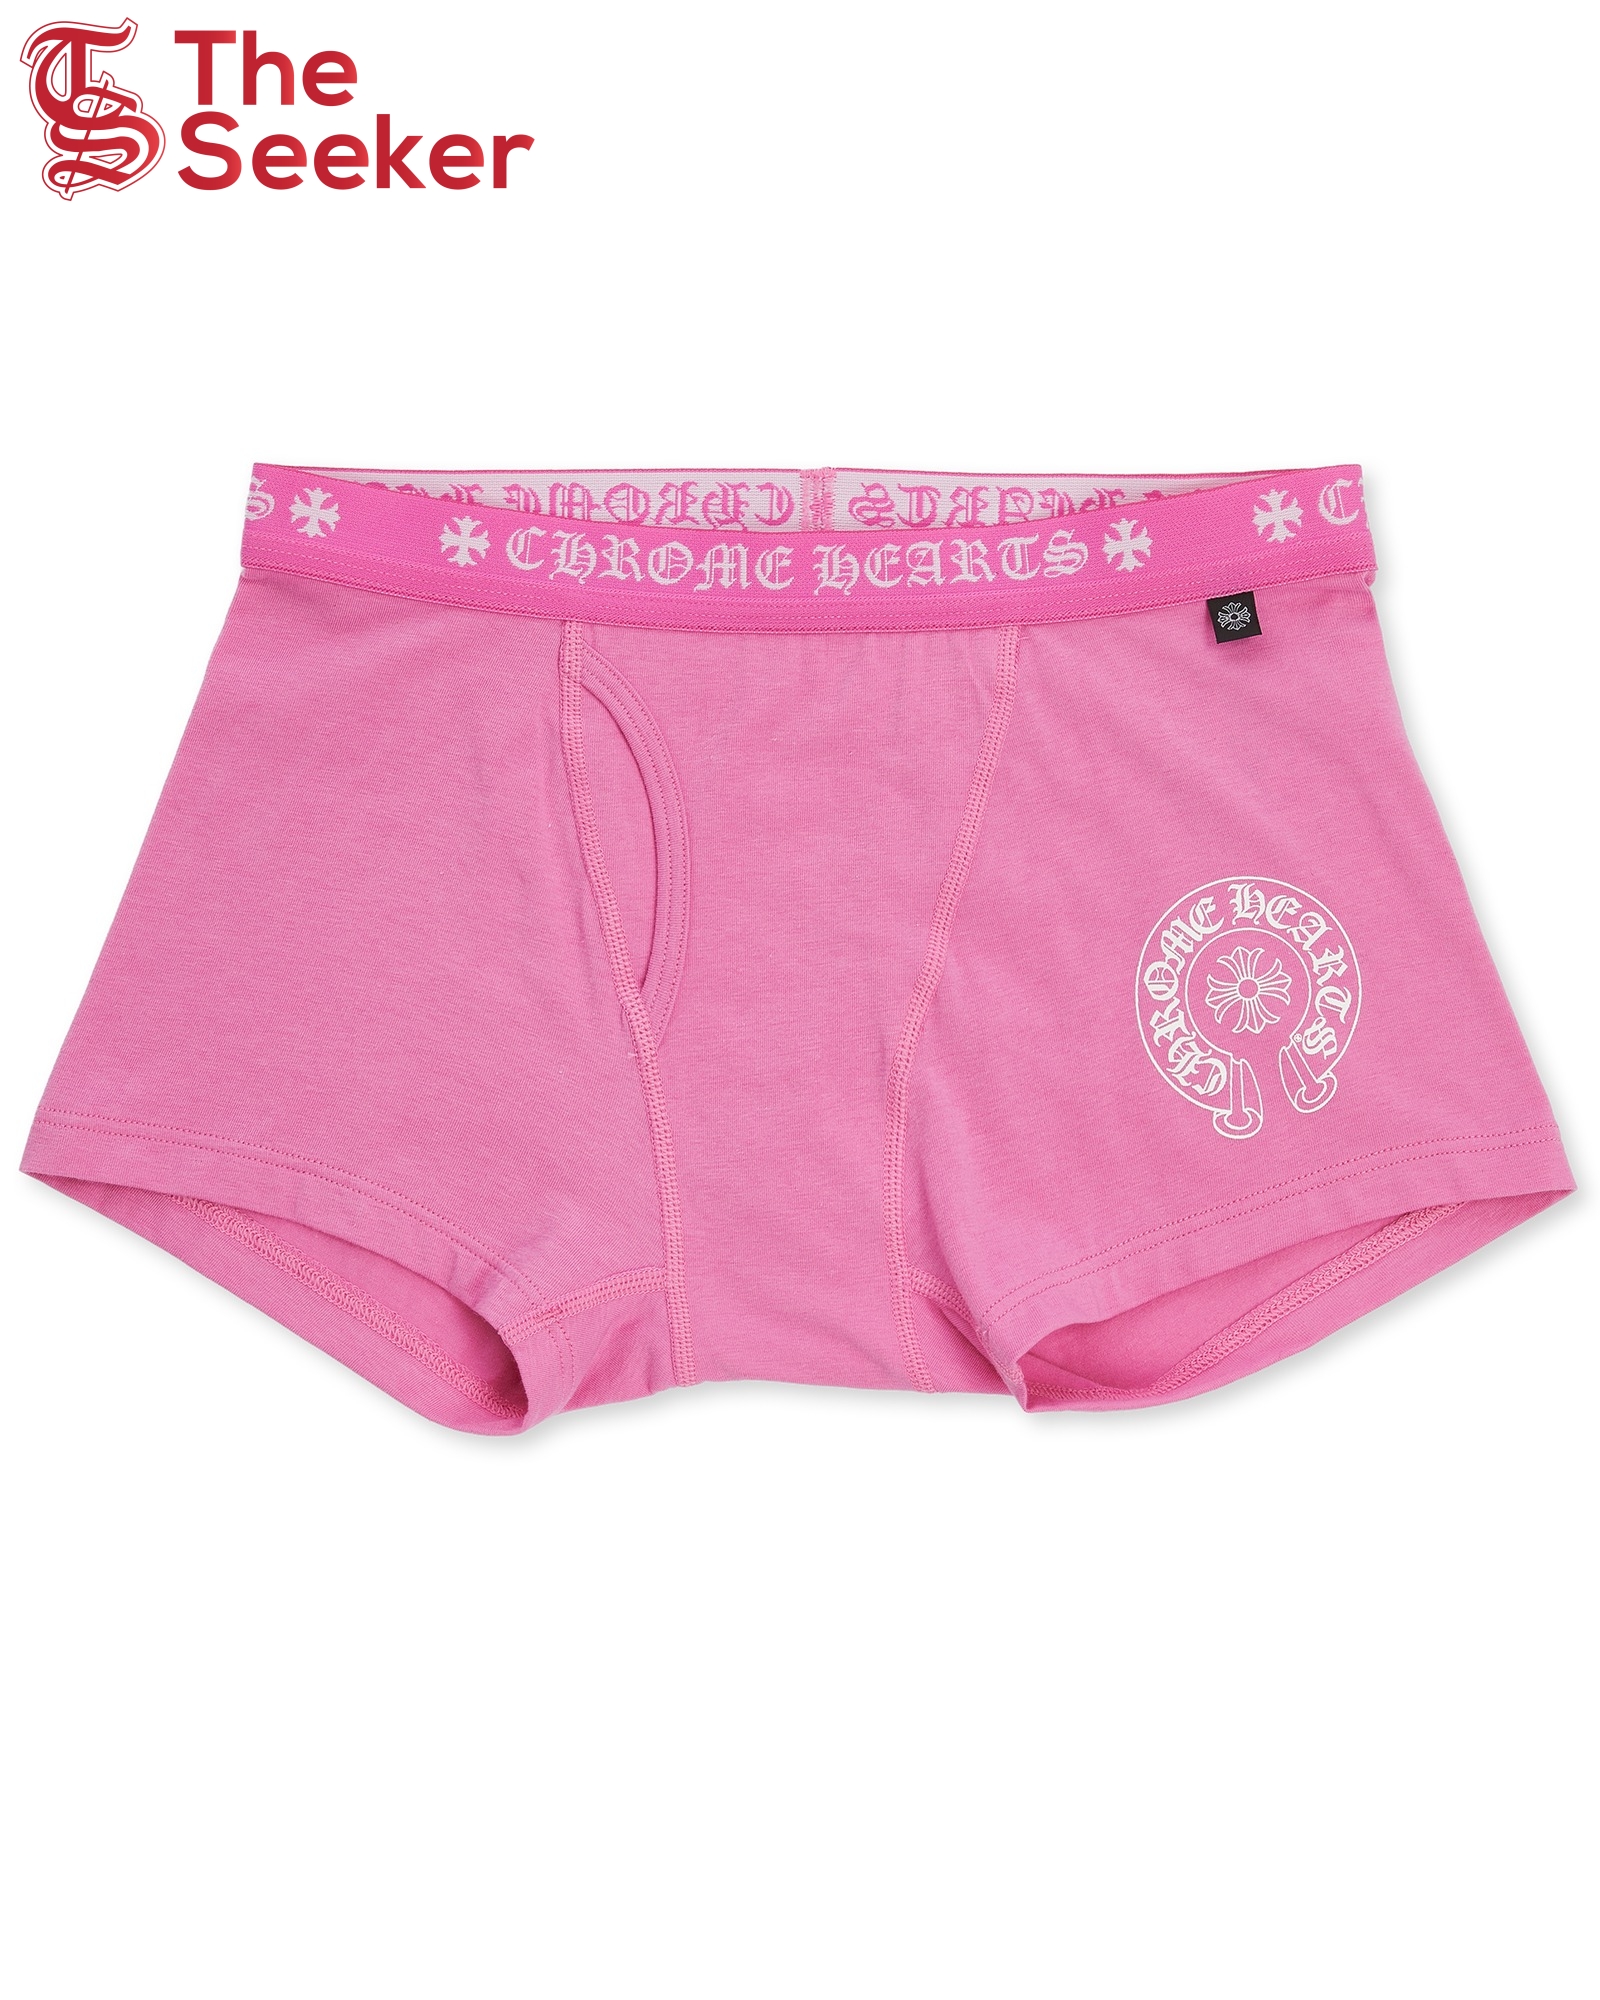 Chrome Hearts Boxer Brief Shorts Pink